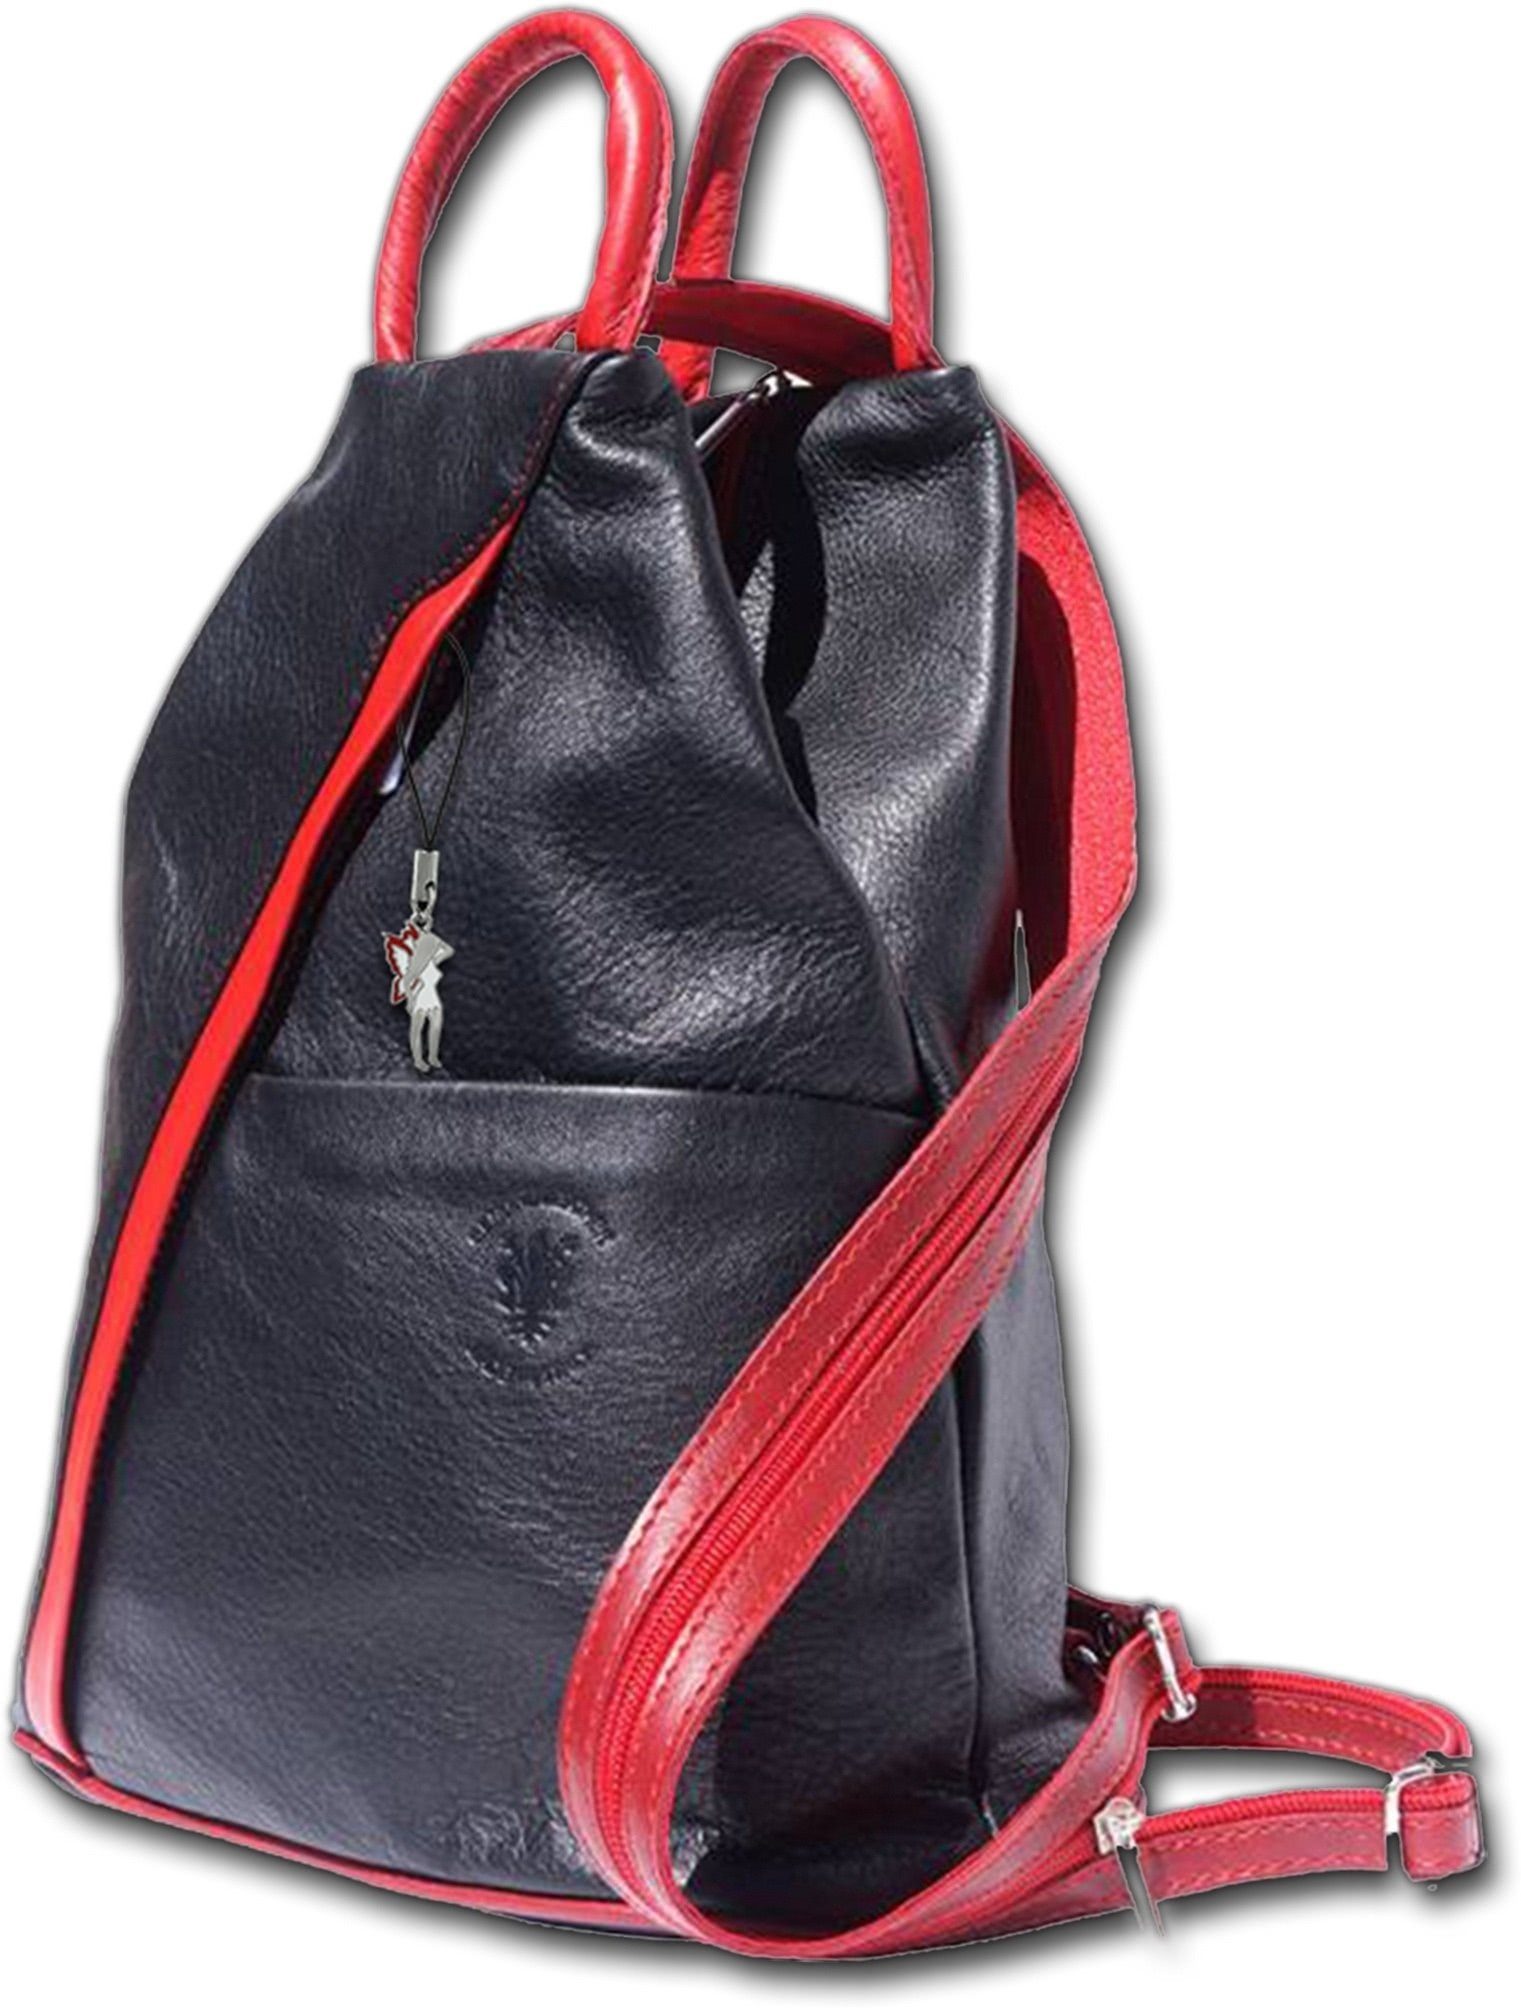 FLORENCE Cityrucksack Florence echtes Leder Damentasche (Schultertasche,  Schultertasche), Damen Rucksack, Tasche Echtleder schwarz, rot, Made-In  Italy